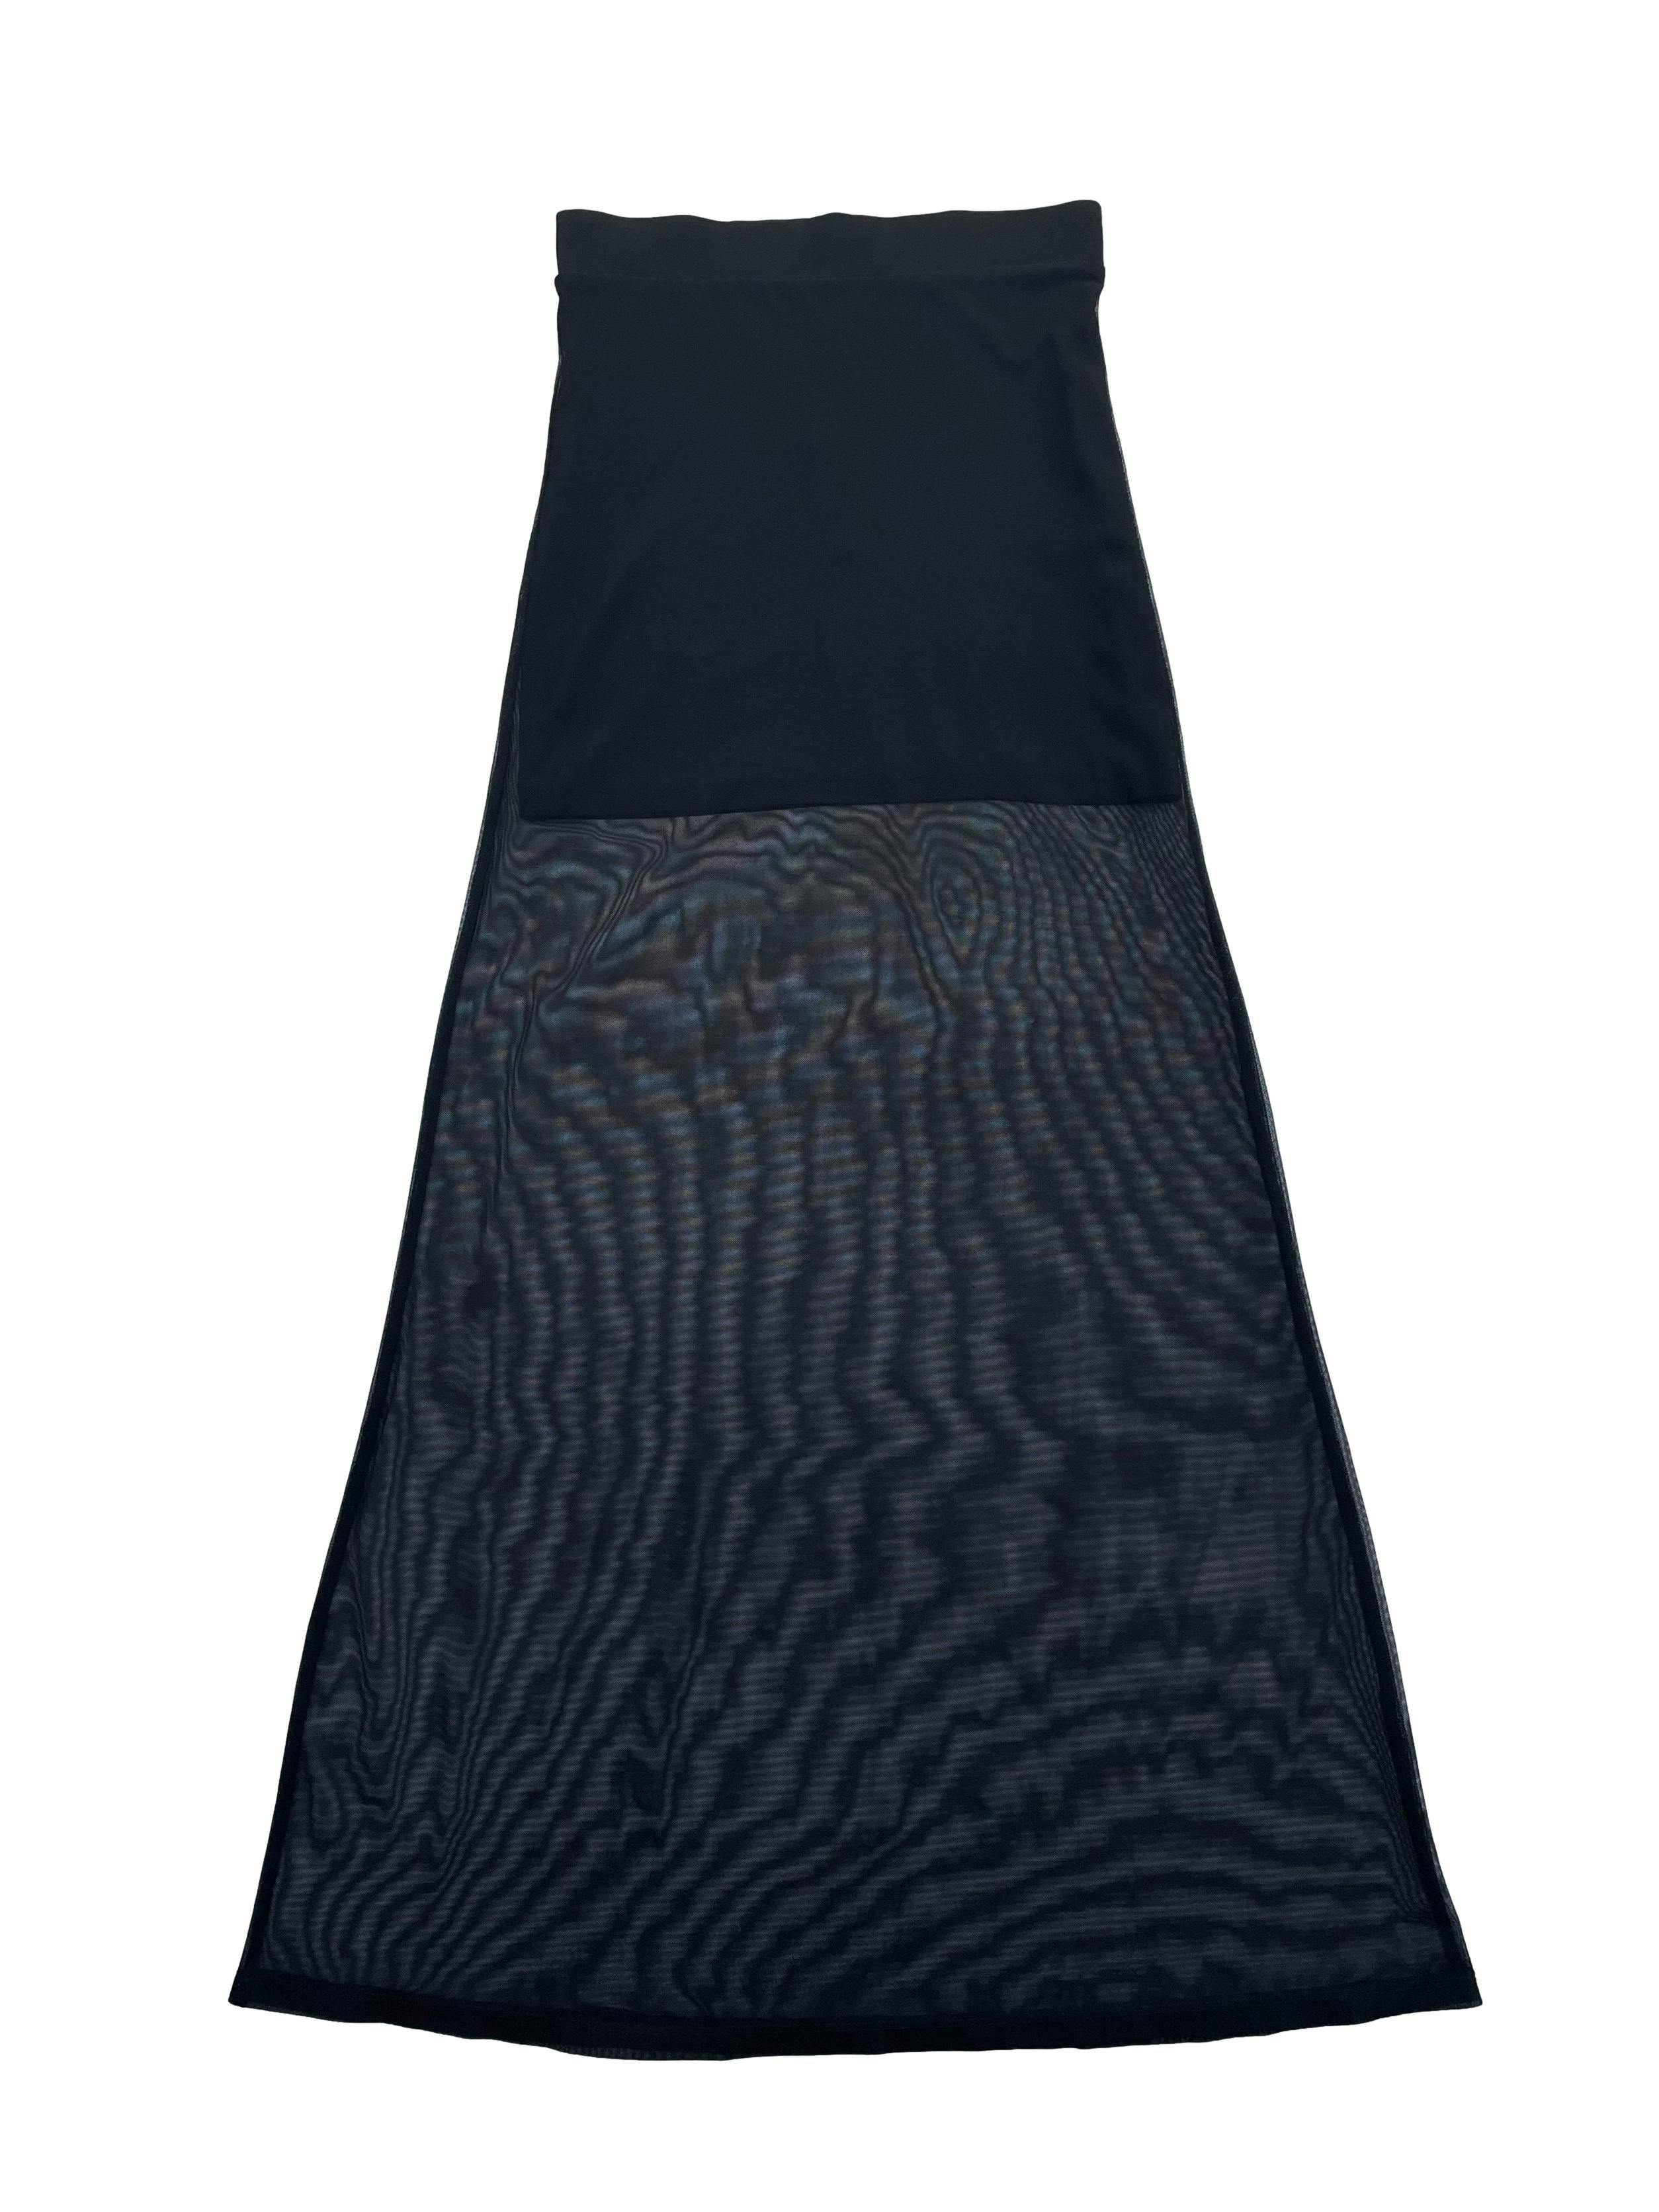 Falda larga de mesh negro con forro corto. Cintura 64cm Largo 105cm